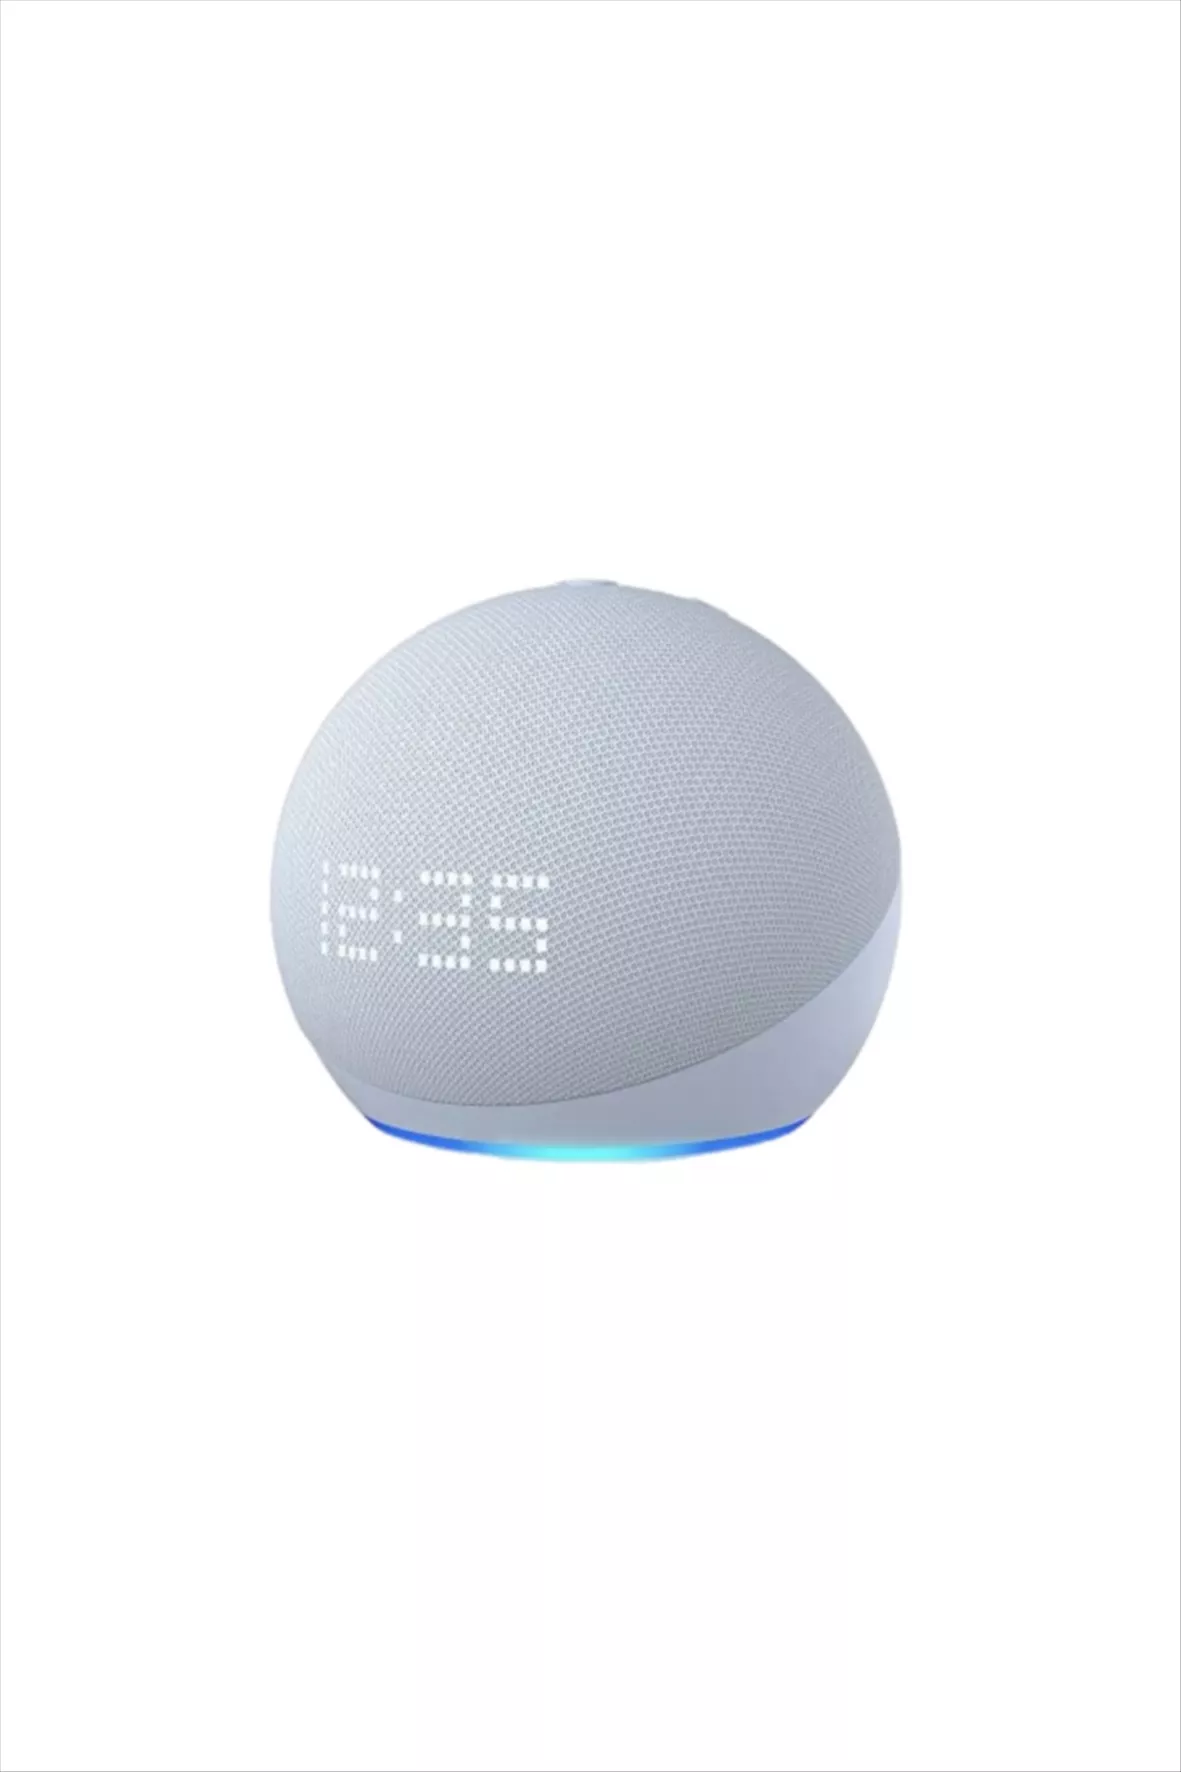 New 2022  Echo Dot 5th Gen Smart speaker w/ clock and Alexa